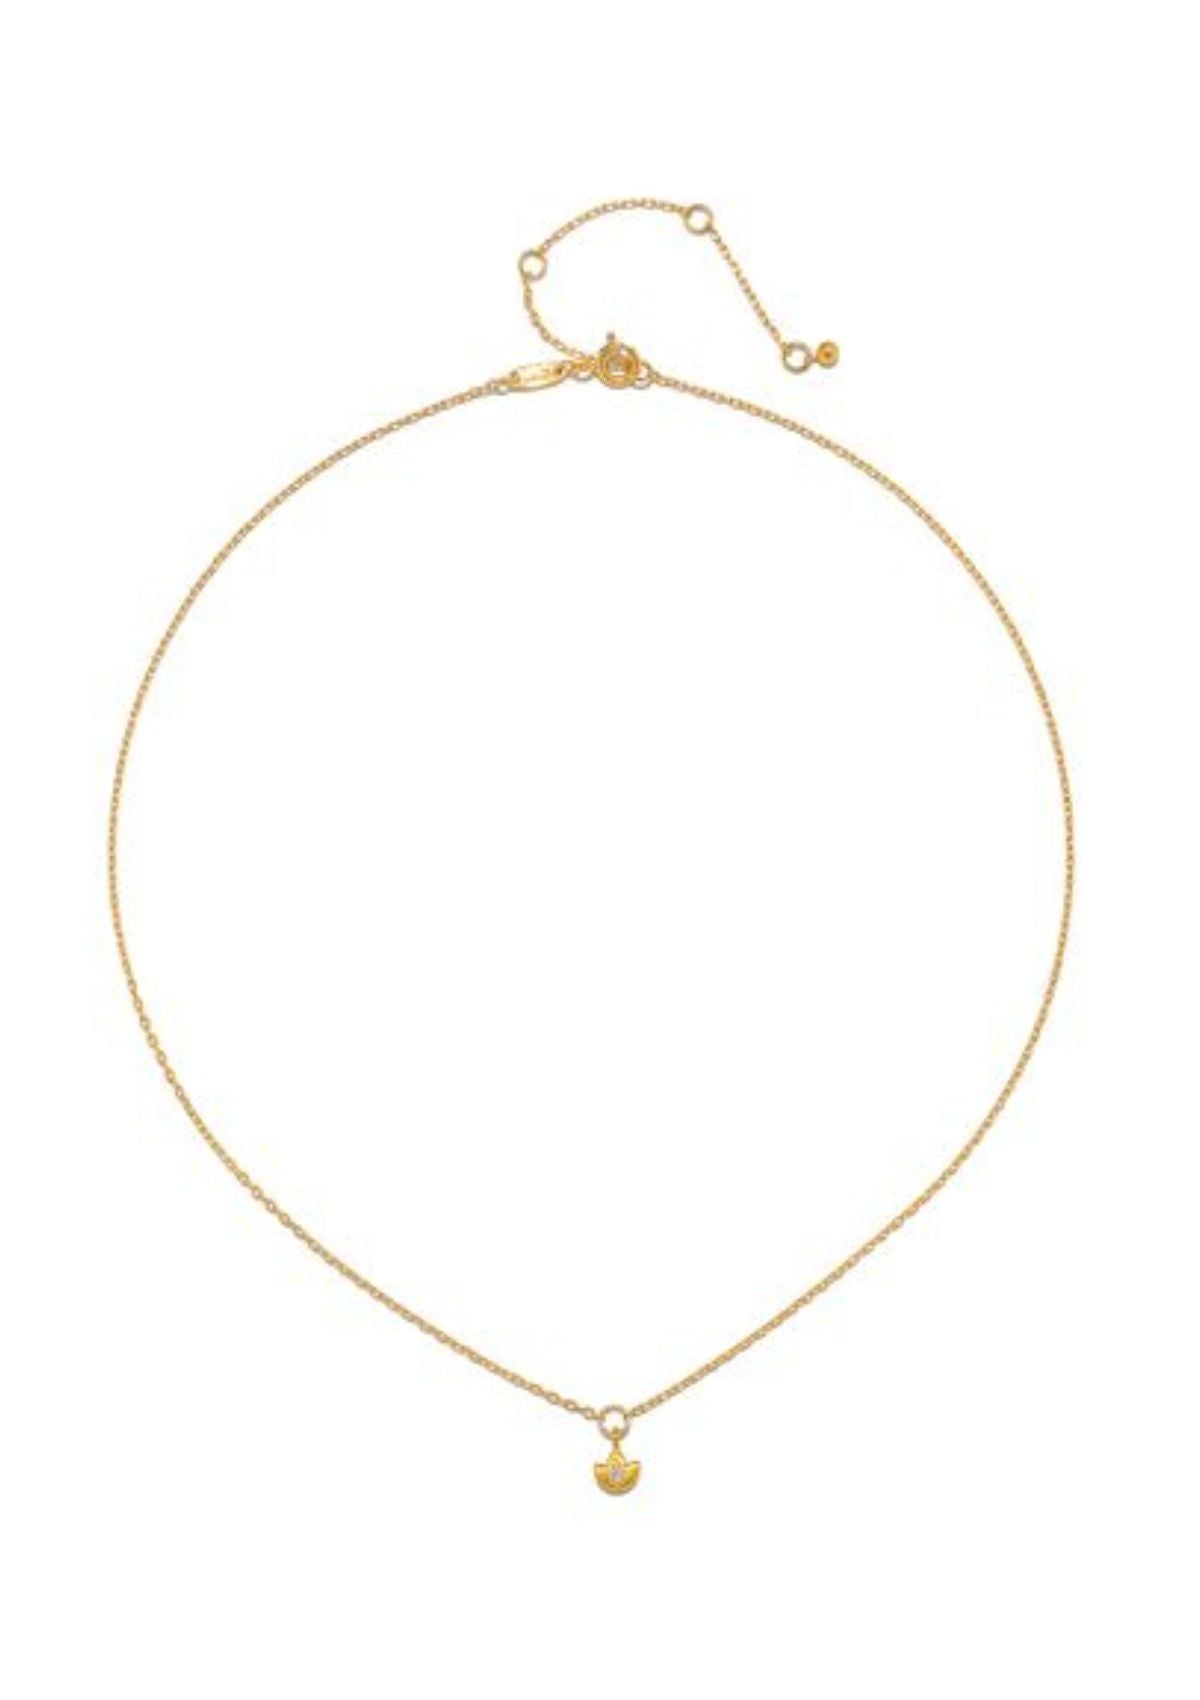 White Topaz Mini Lotus Pendant Necklace, 16" -Satya Jewelry- Ruby Jane-